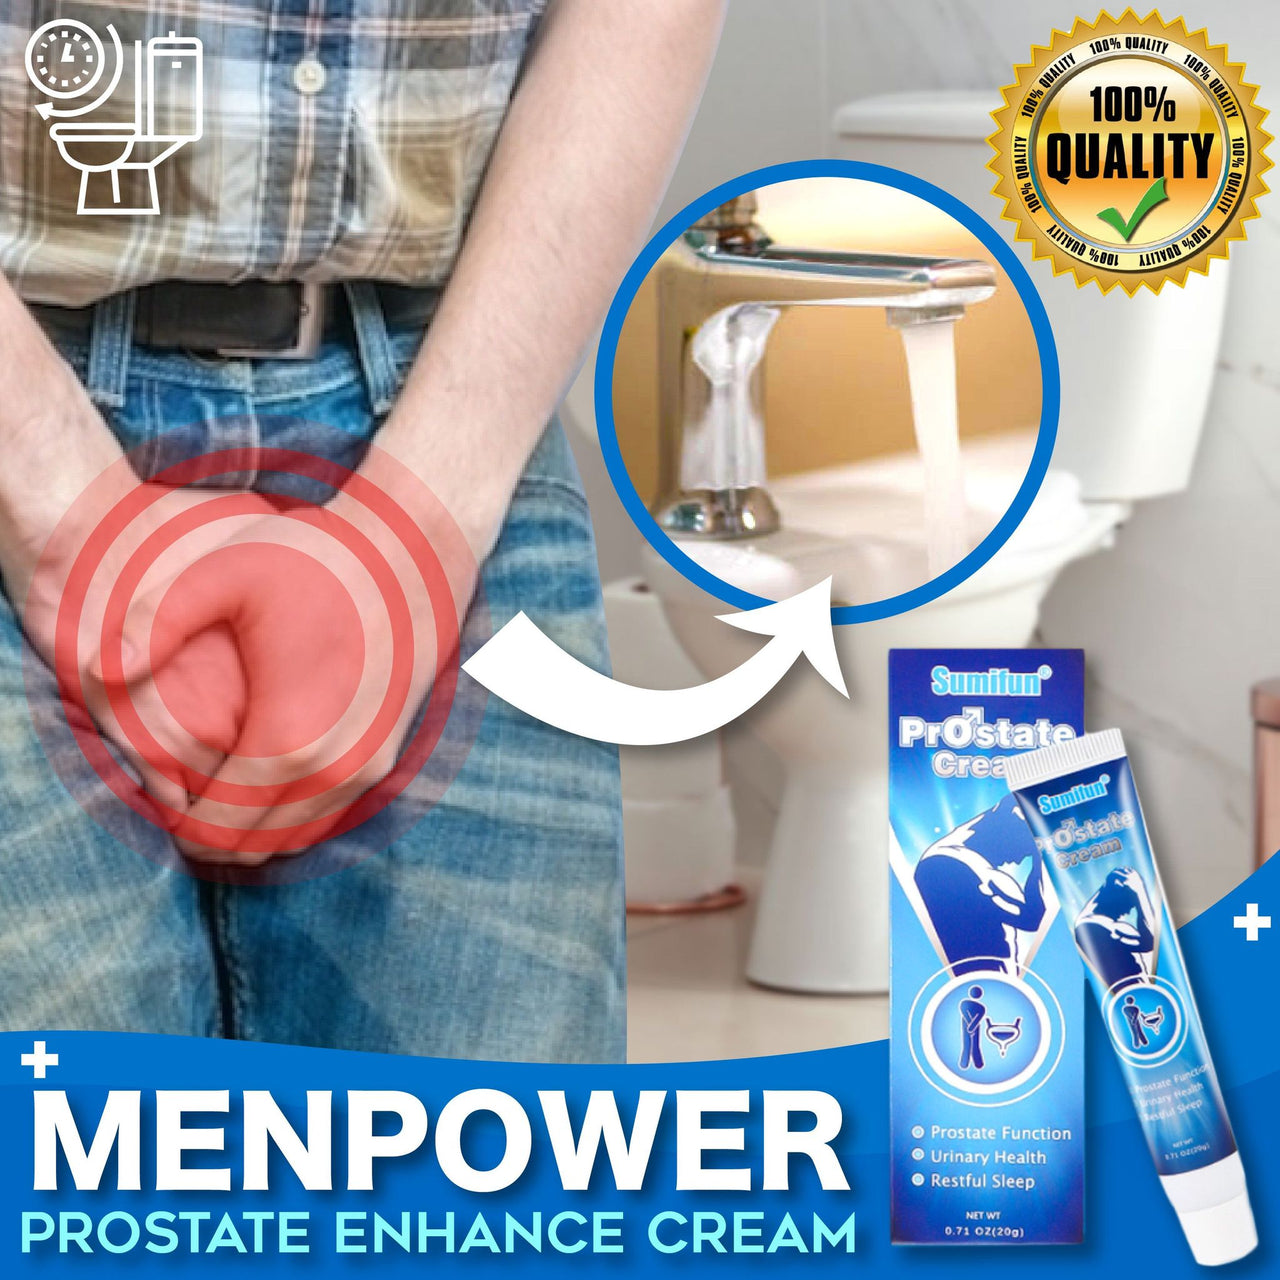 MenPower Prostate Enhance Cream - thedealzninja